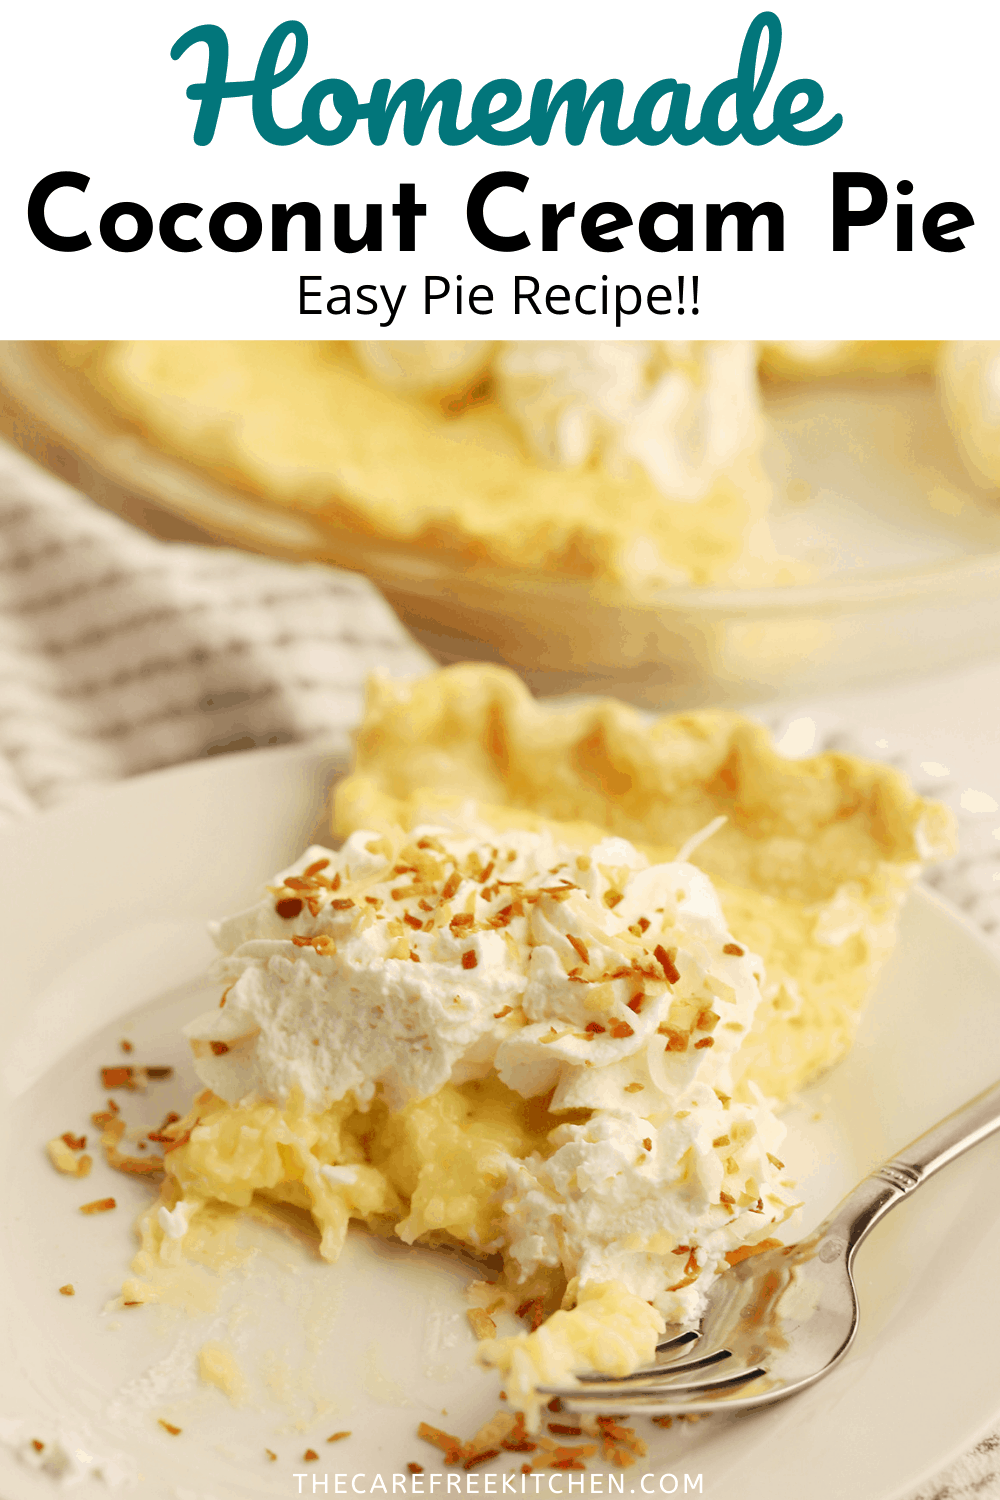 Easy Coconut Cream Pie Recipe - The Carefree Kitchen